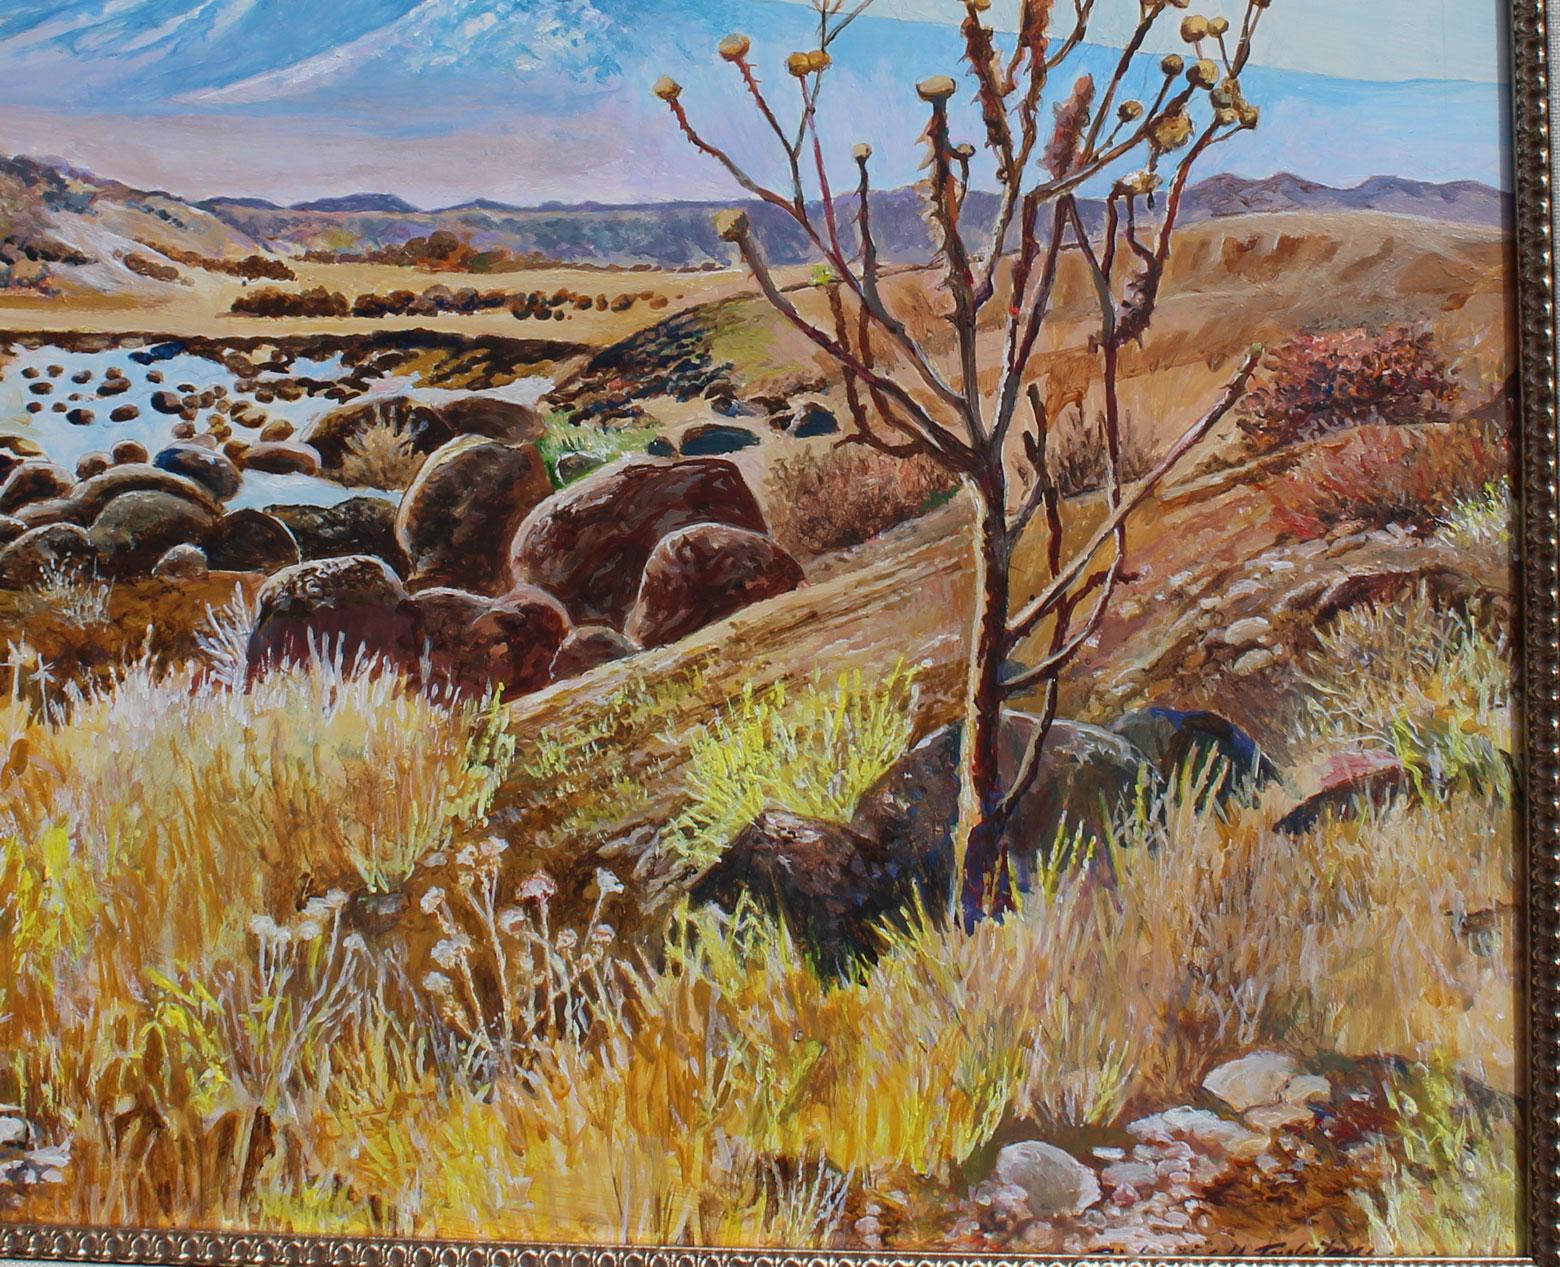 Mt. Ararat, near the Ardashat area with Thorn tree, Armenia  - Impressionist Painting by Richard H. Tashjian